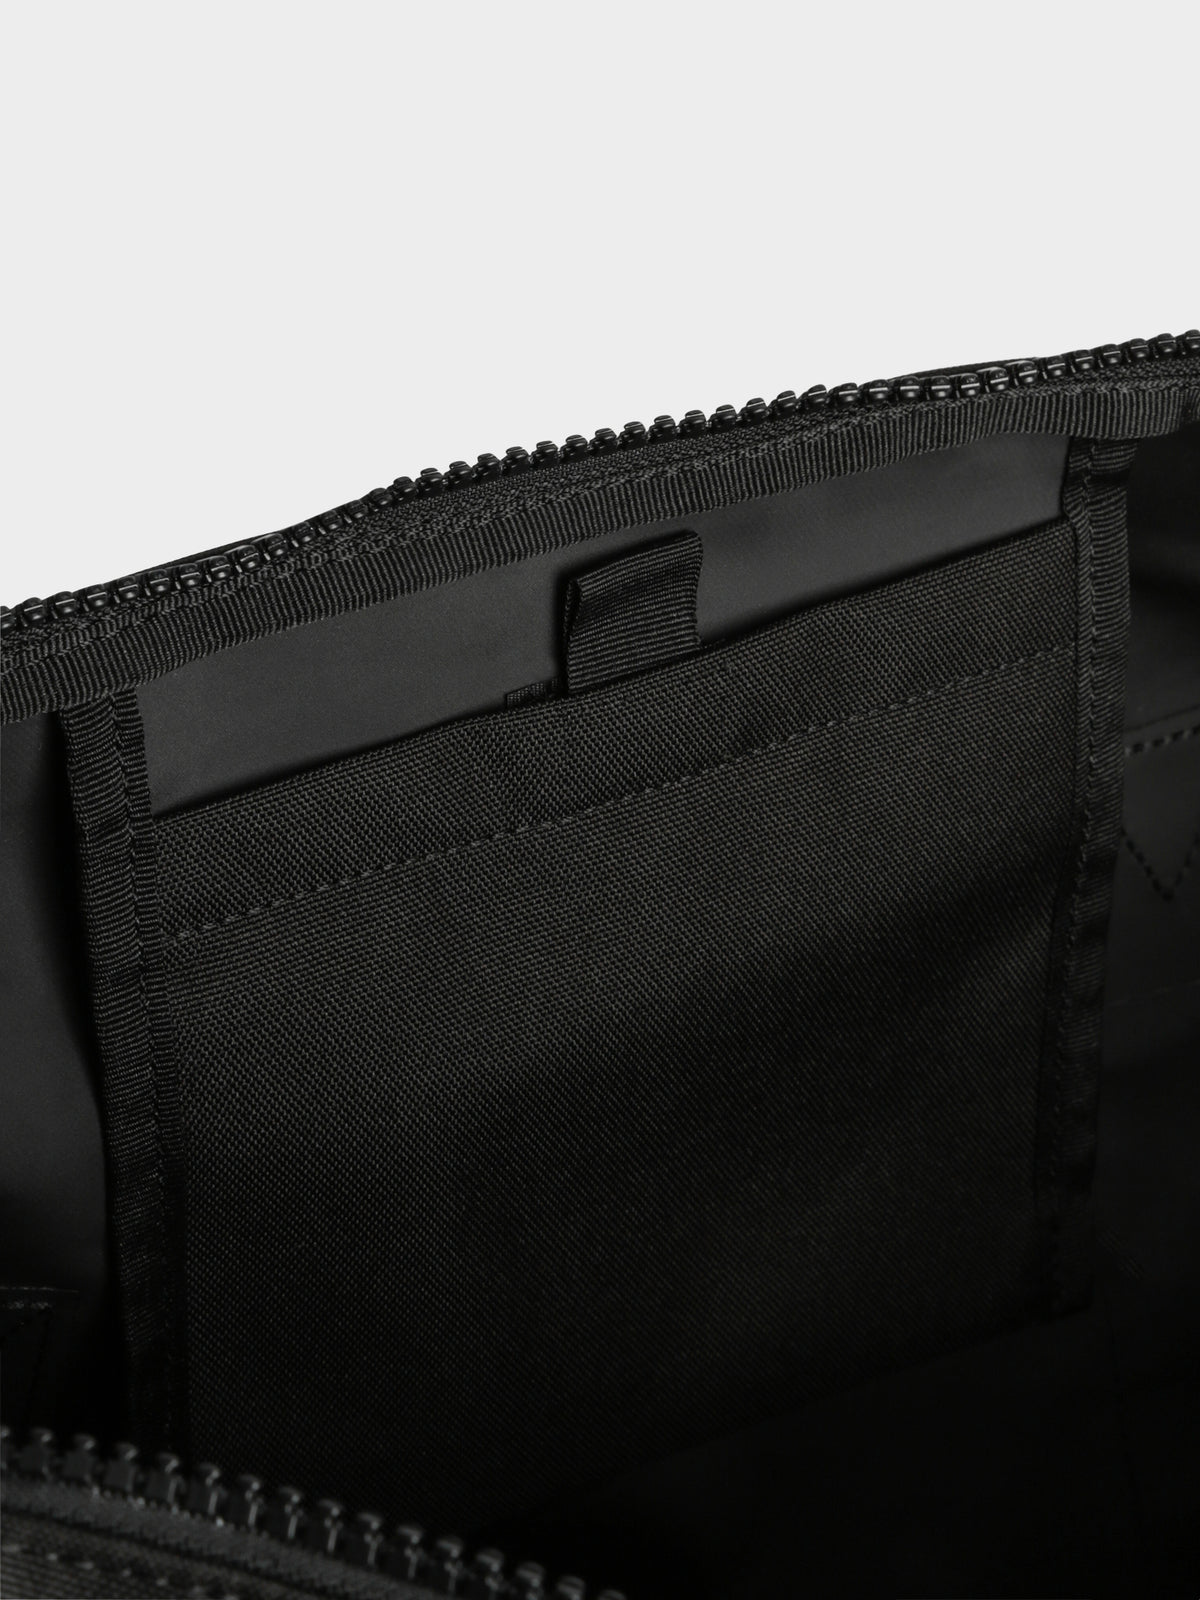 Wright Duffle Bag in Black